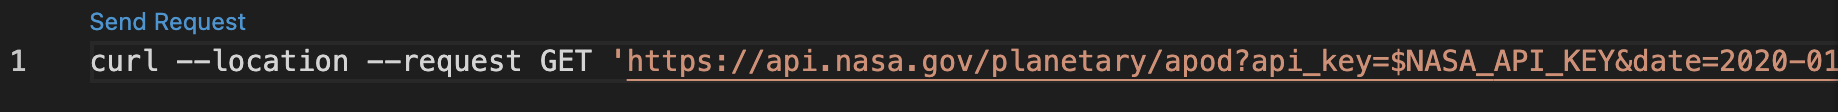 Screen capture of a curl command request in VS Code